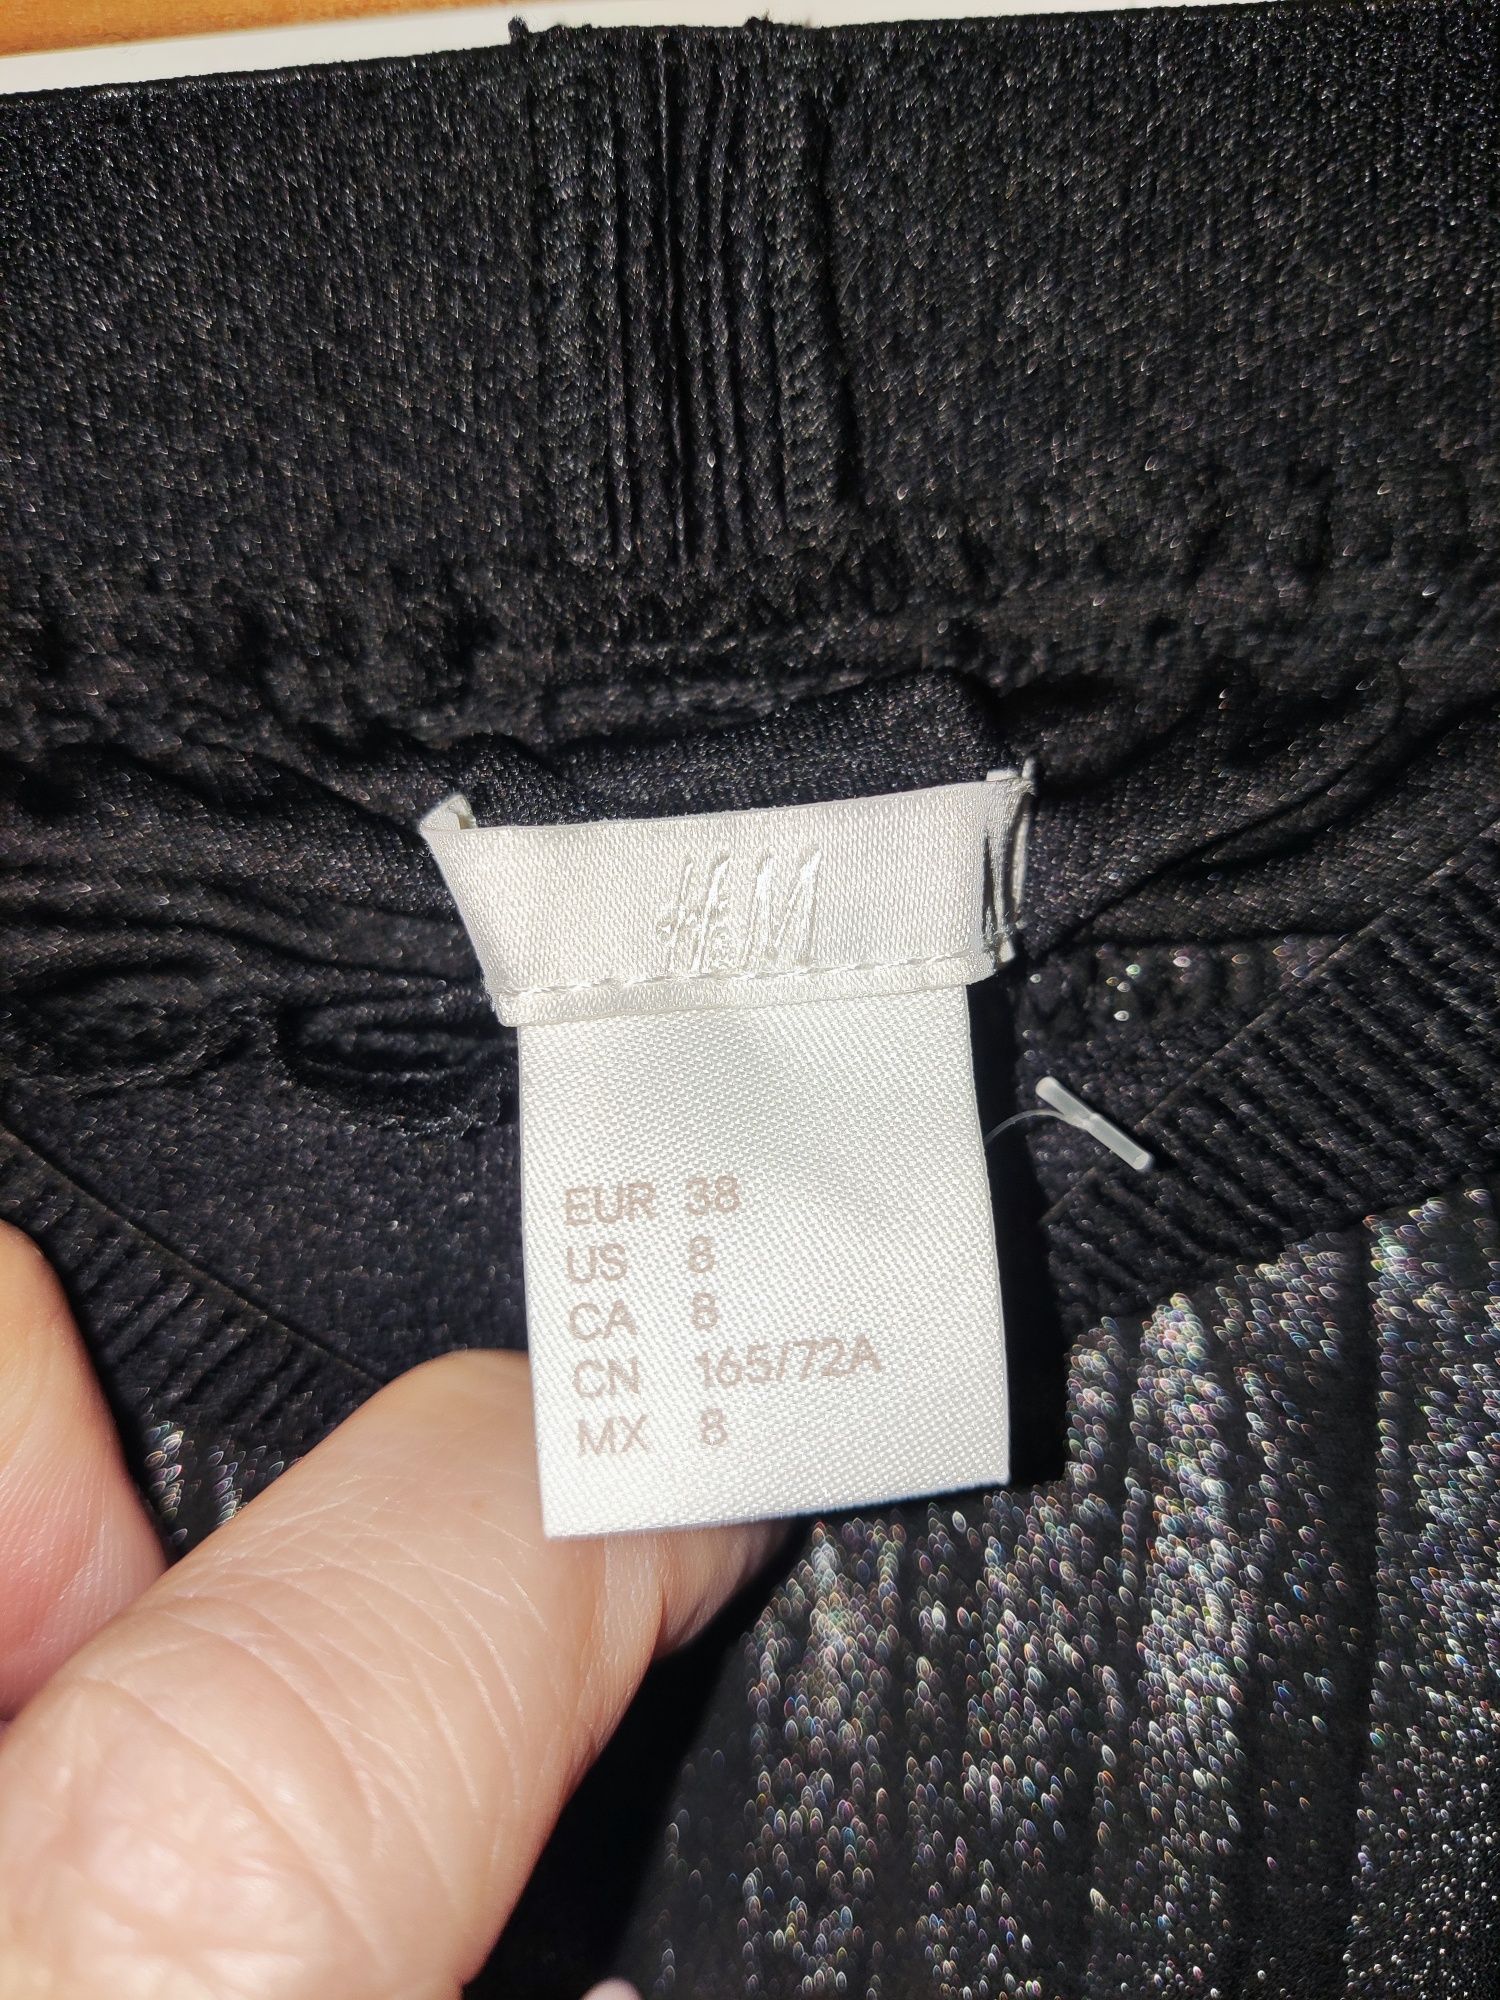 H&M spódnica plisowana czarna ze srebrem 38 M